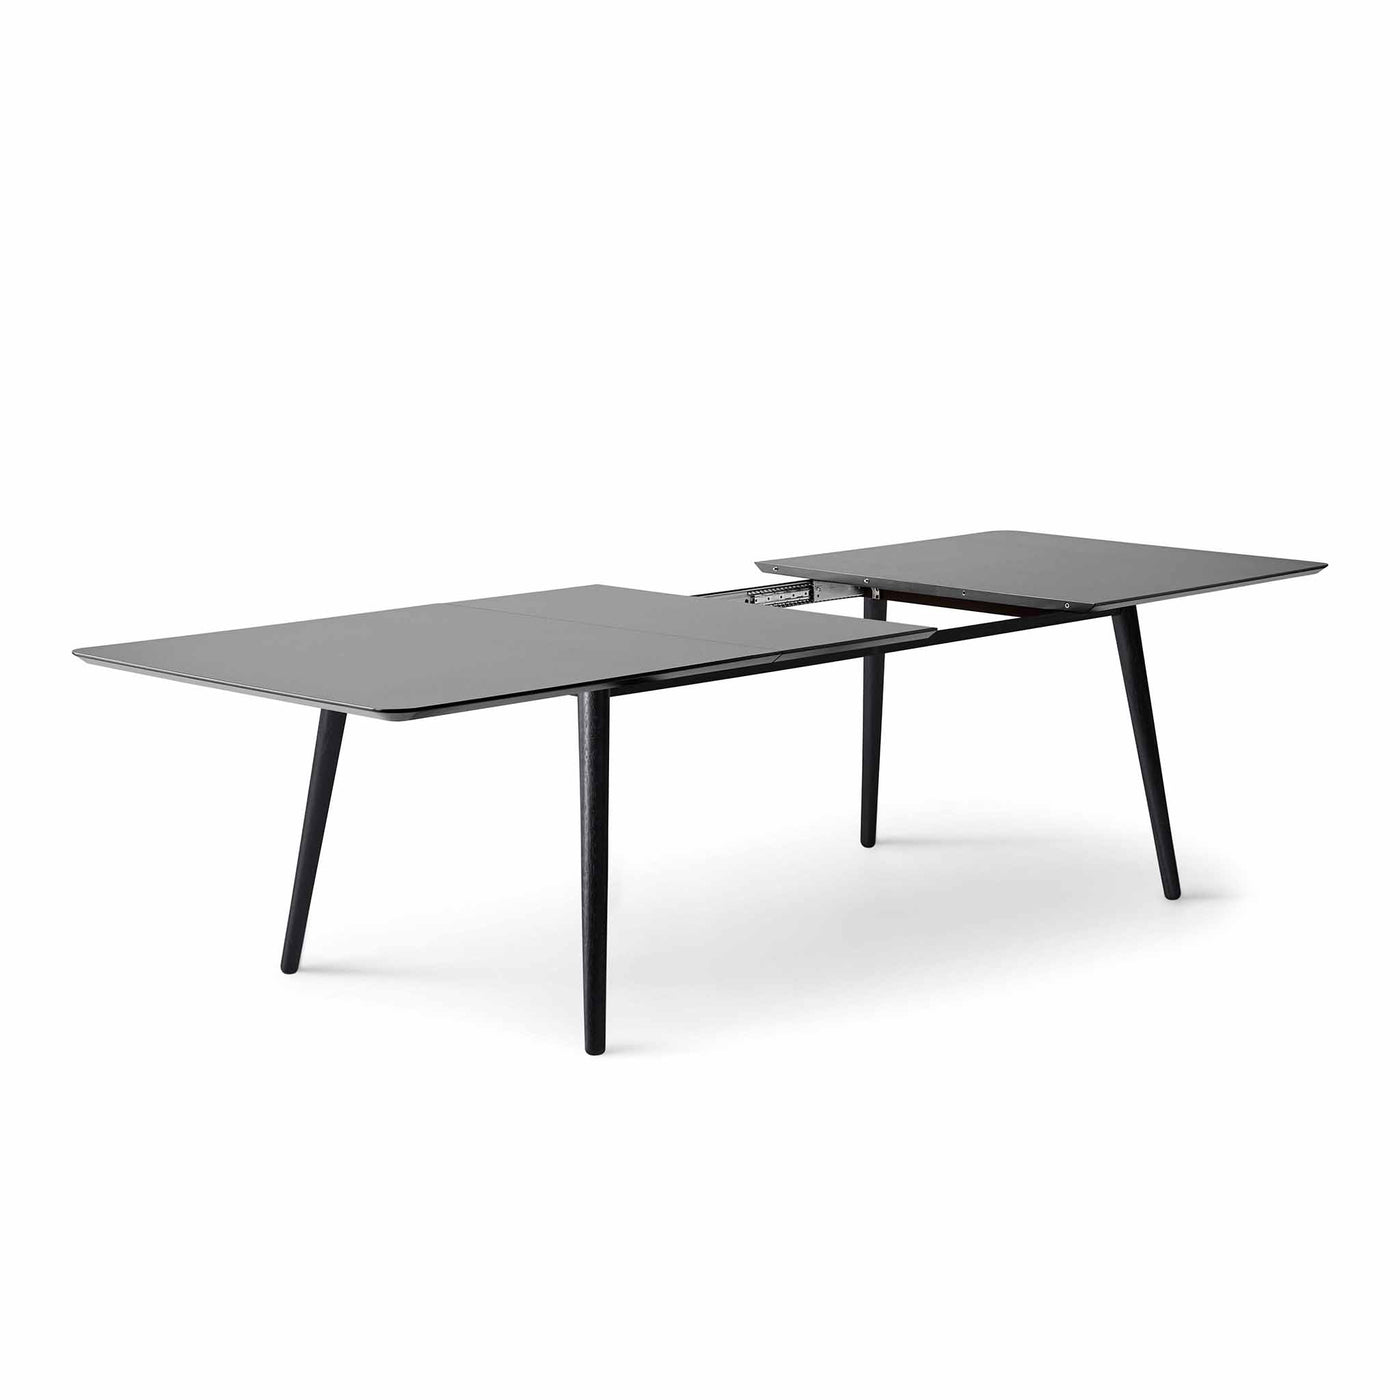 Meza by Hammel Rounded spisebord med bordplade i grafit nano laminat og stel i sortbejdset ask.